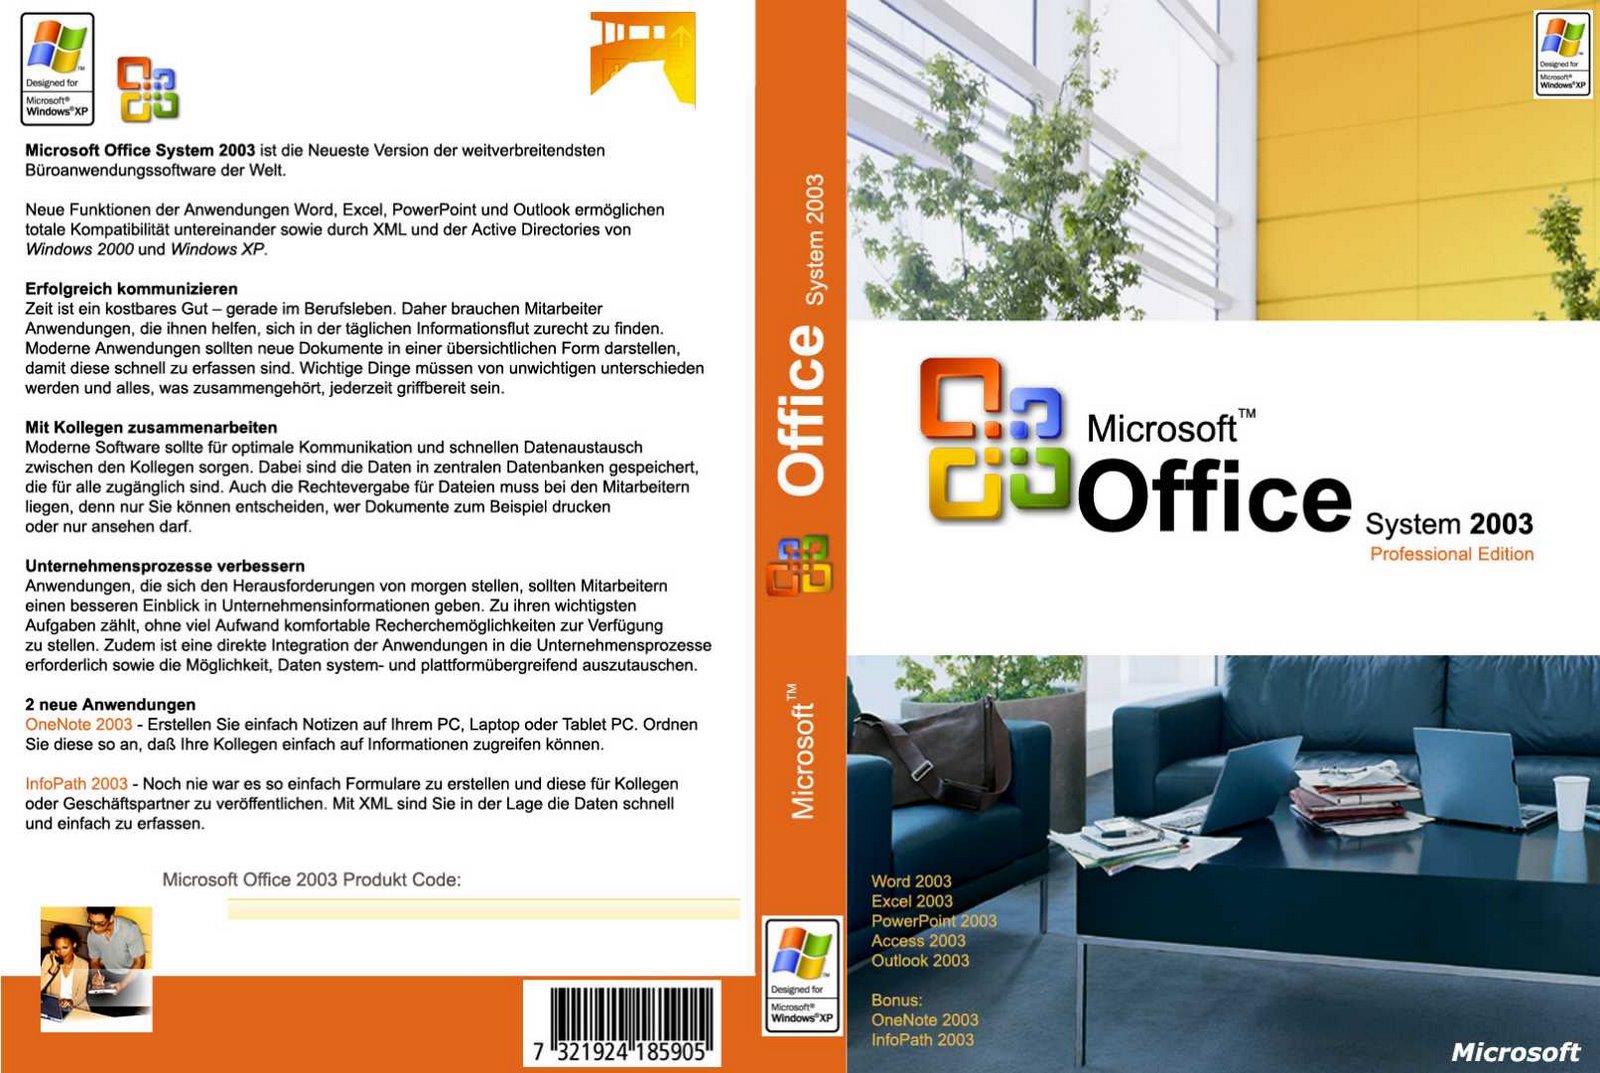 Microsoft Office Professional 2003 Edition